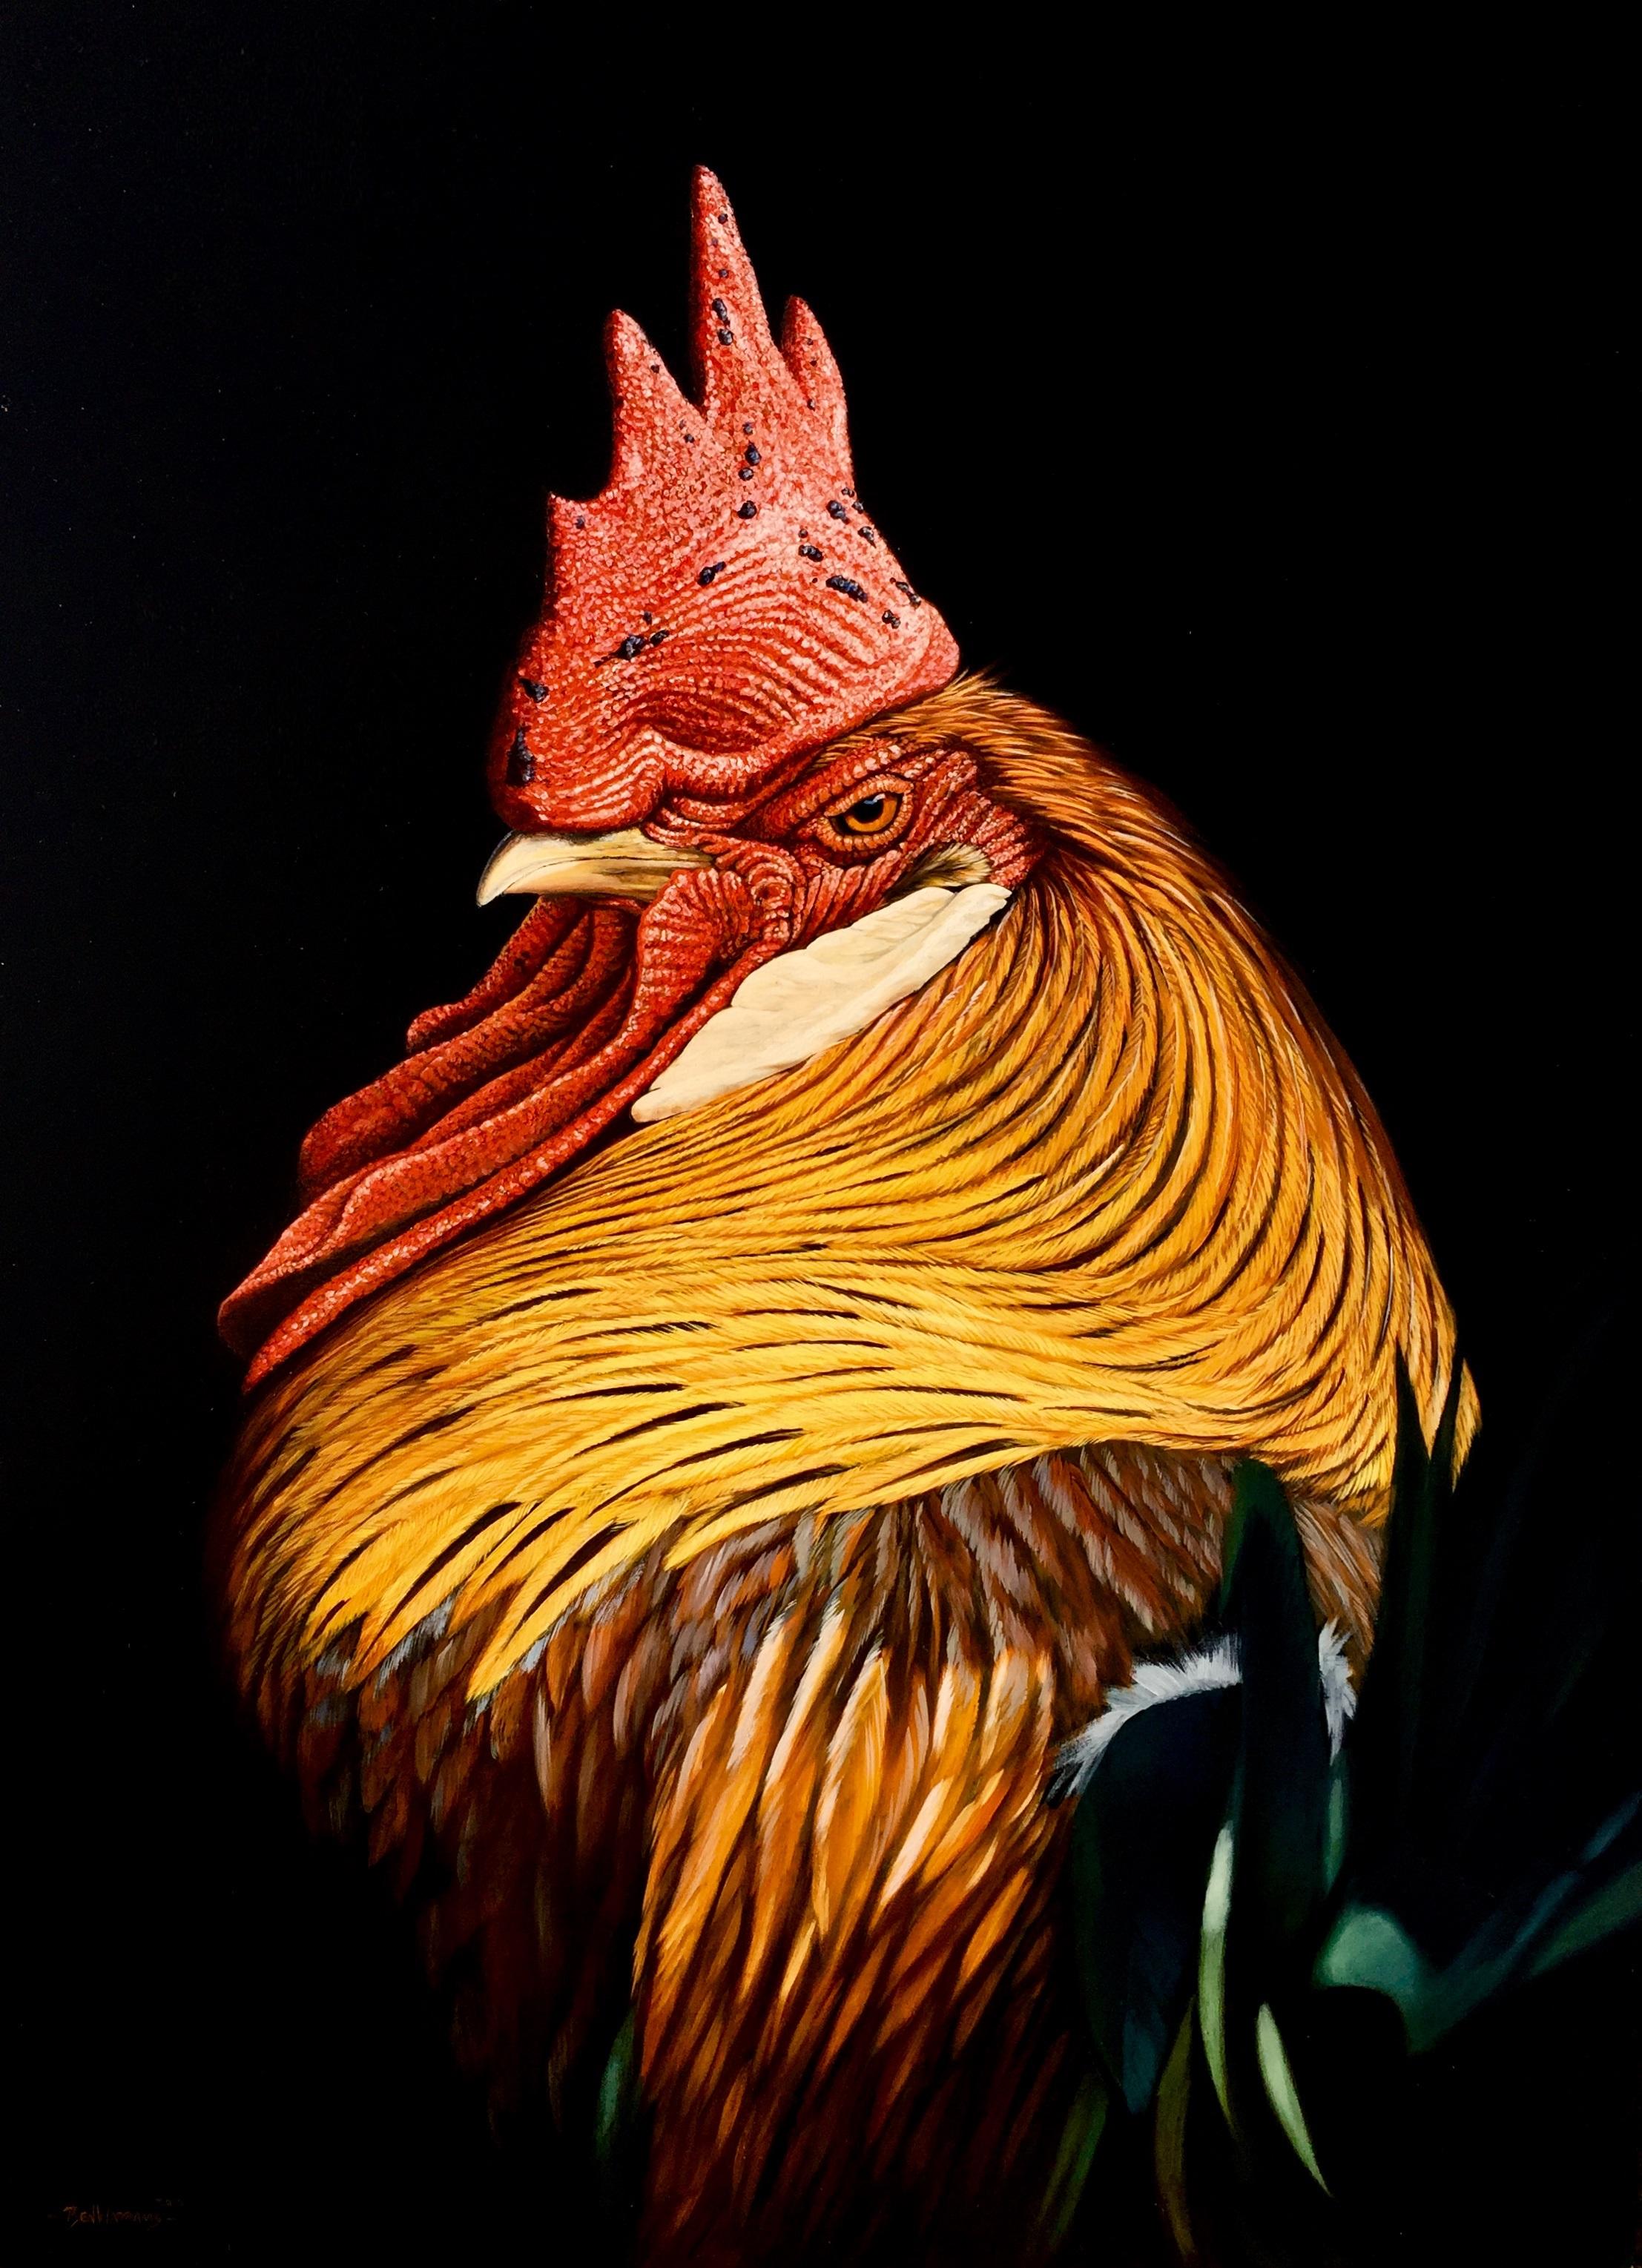 Ben Waddams Animal Painting - 'Cockerel' Photorealist painting fo a colourful bird, red, orange, green, black